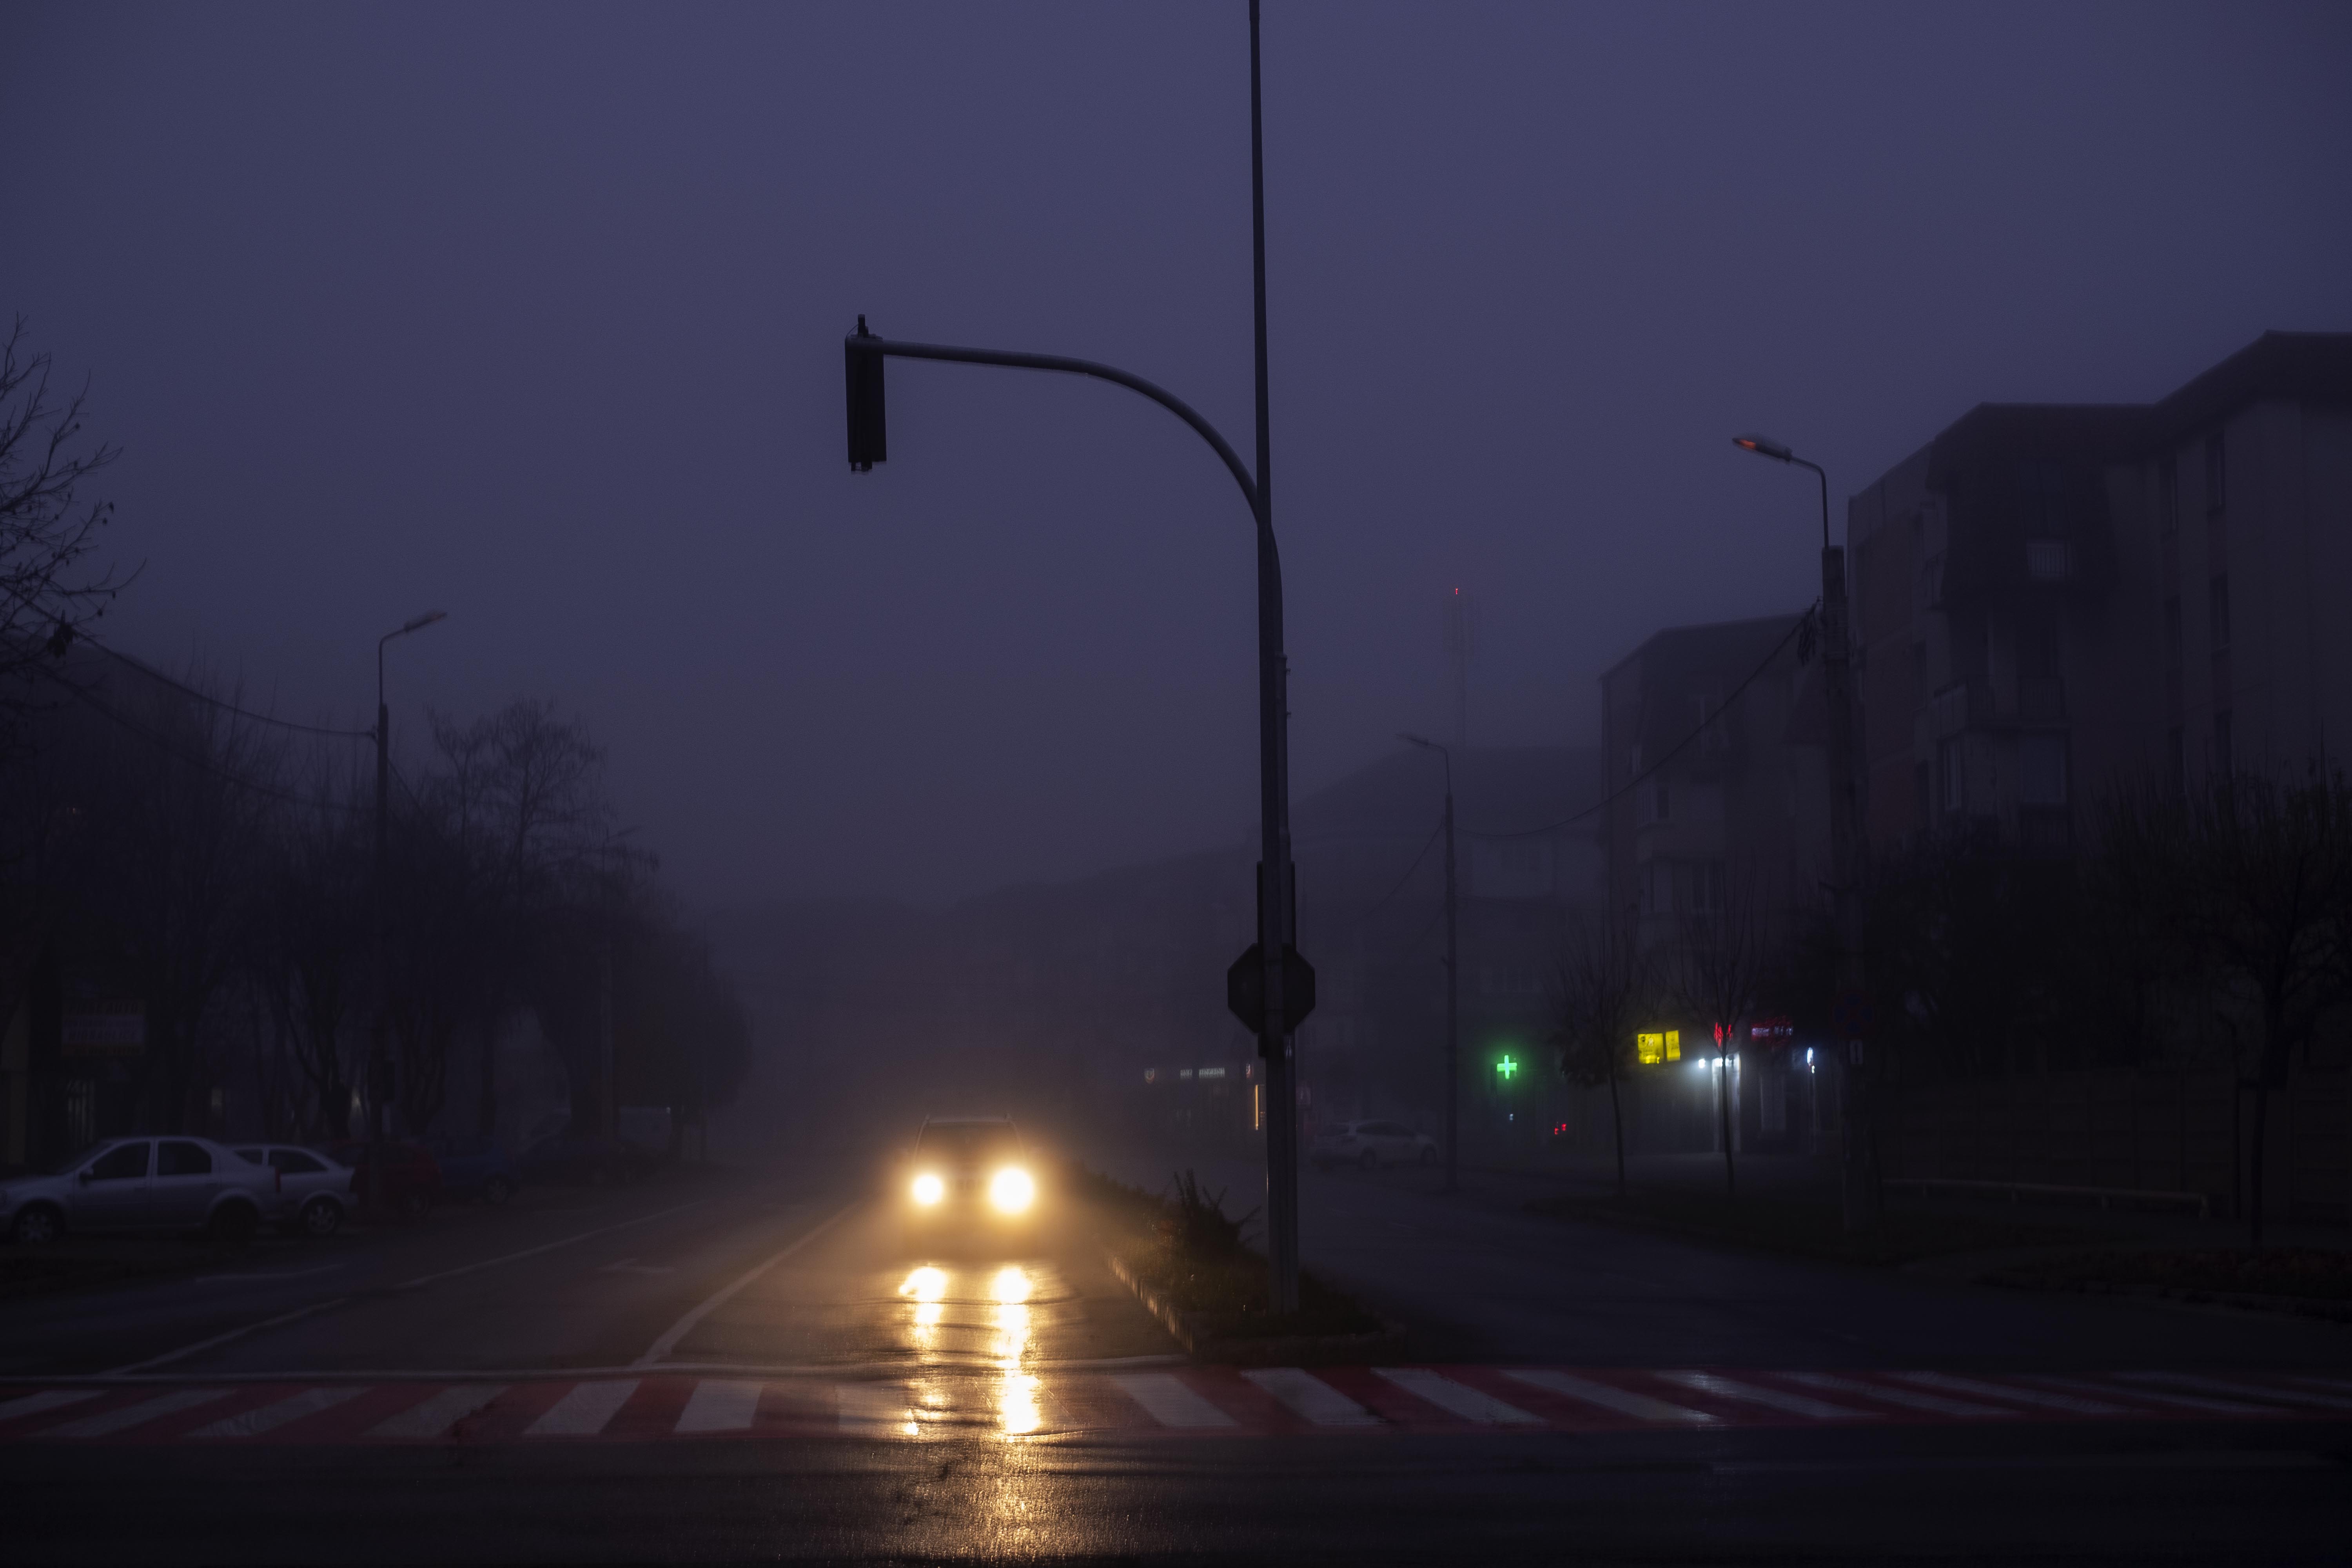 fog3.jpg